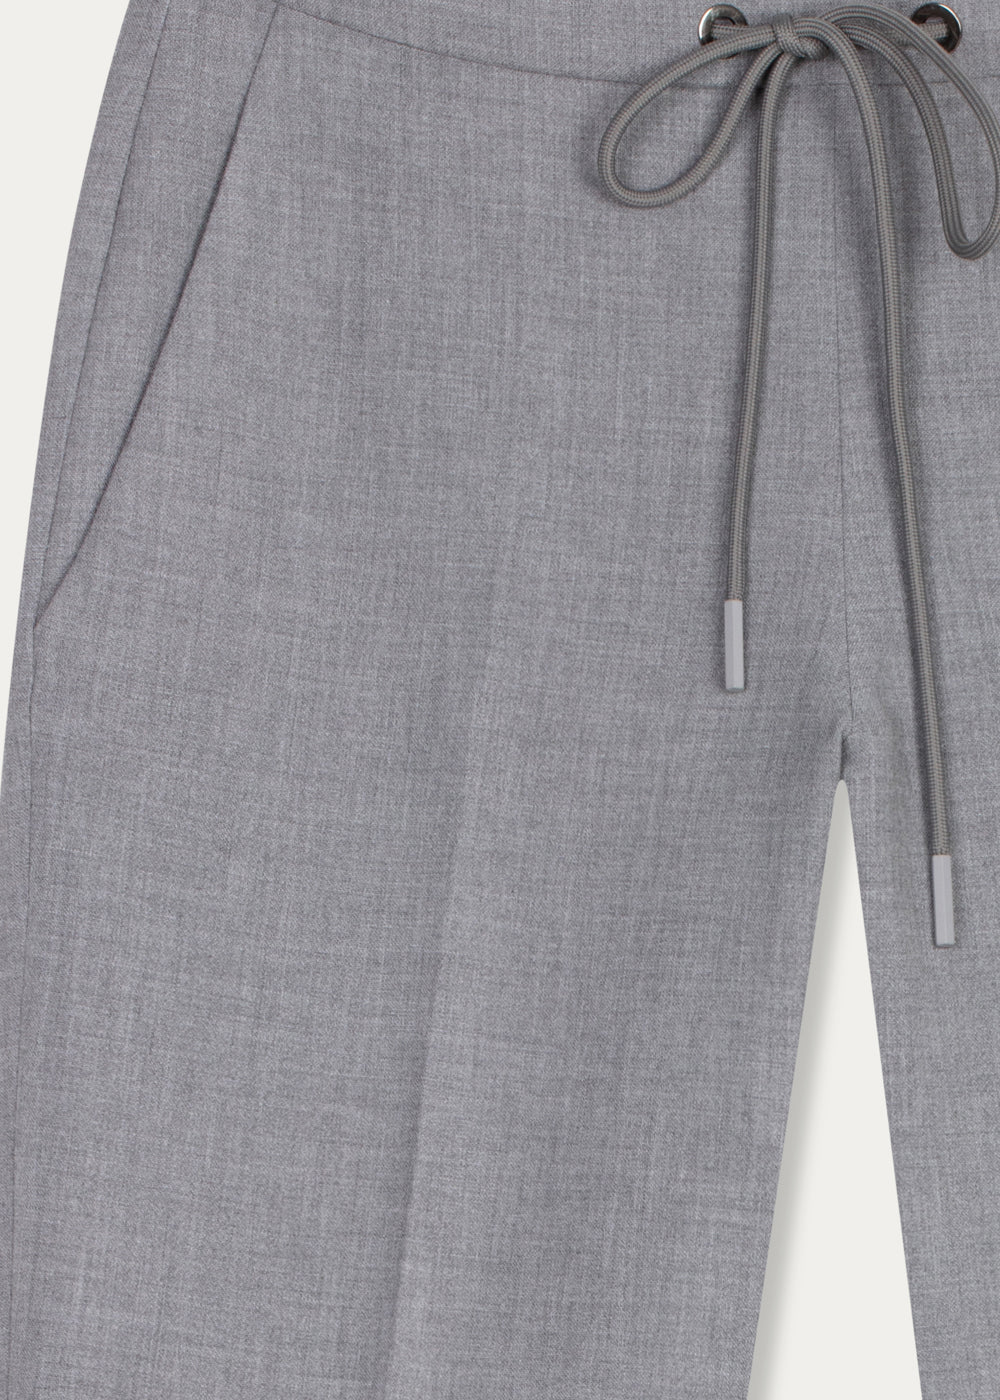 Pantalon avec cordon de serrage gris